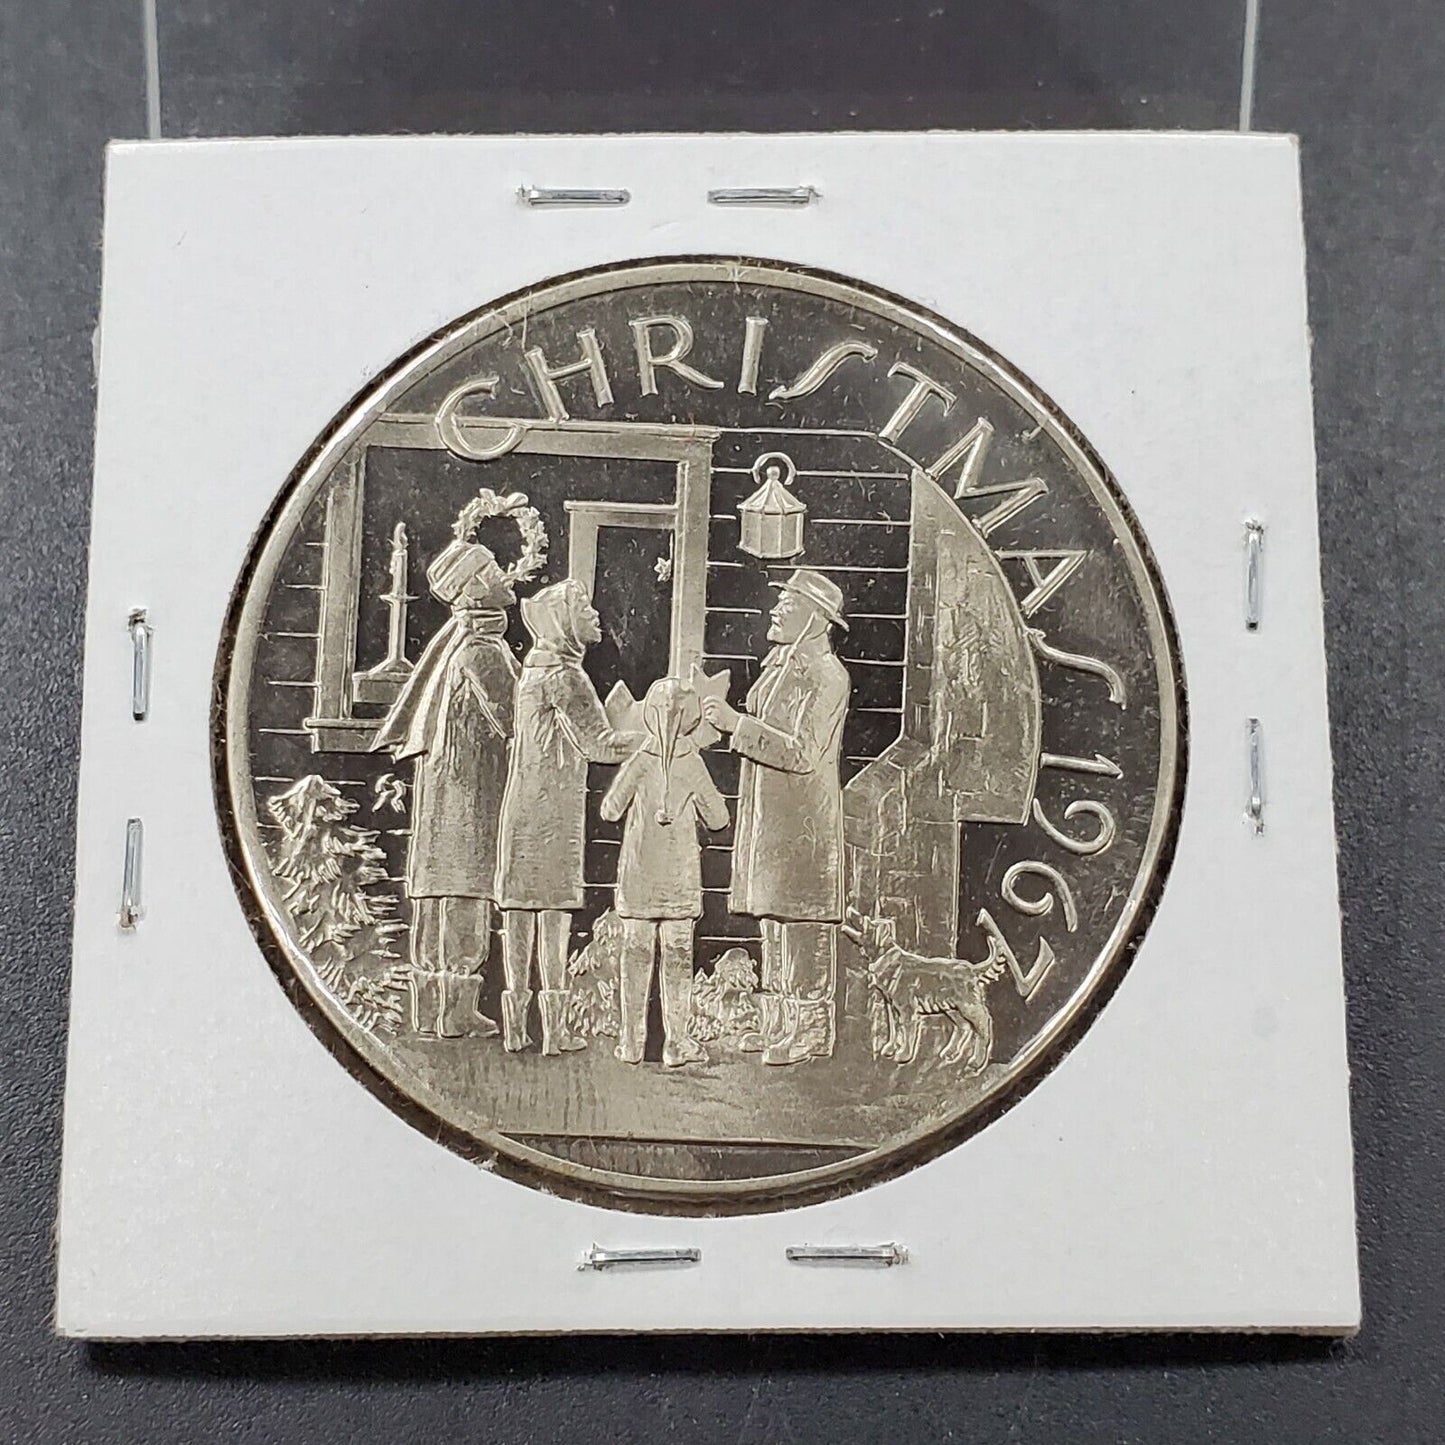 1967 Merry Christmas Copper nickel Round